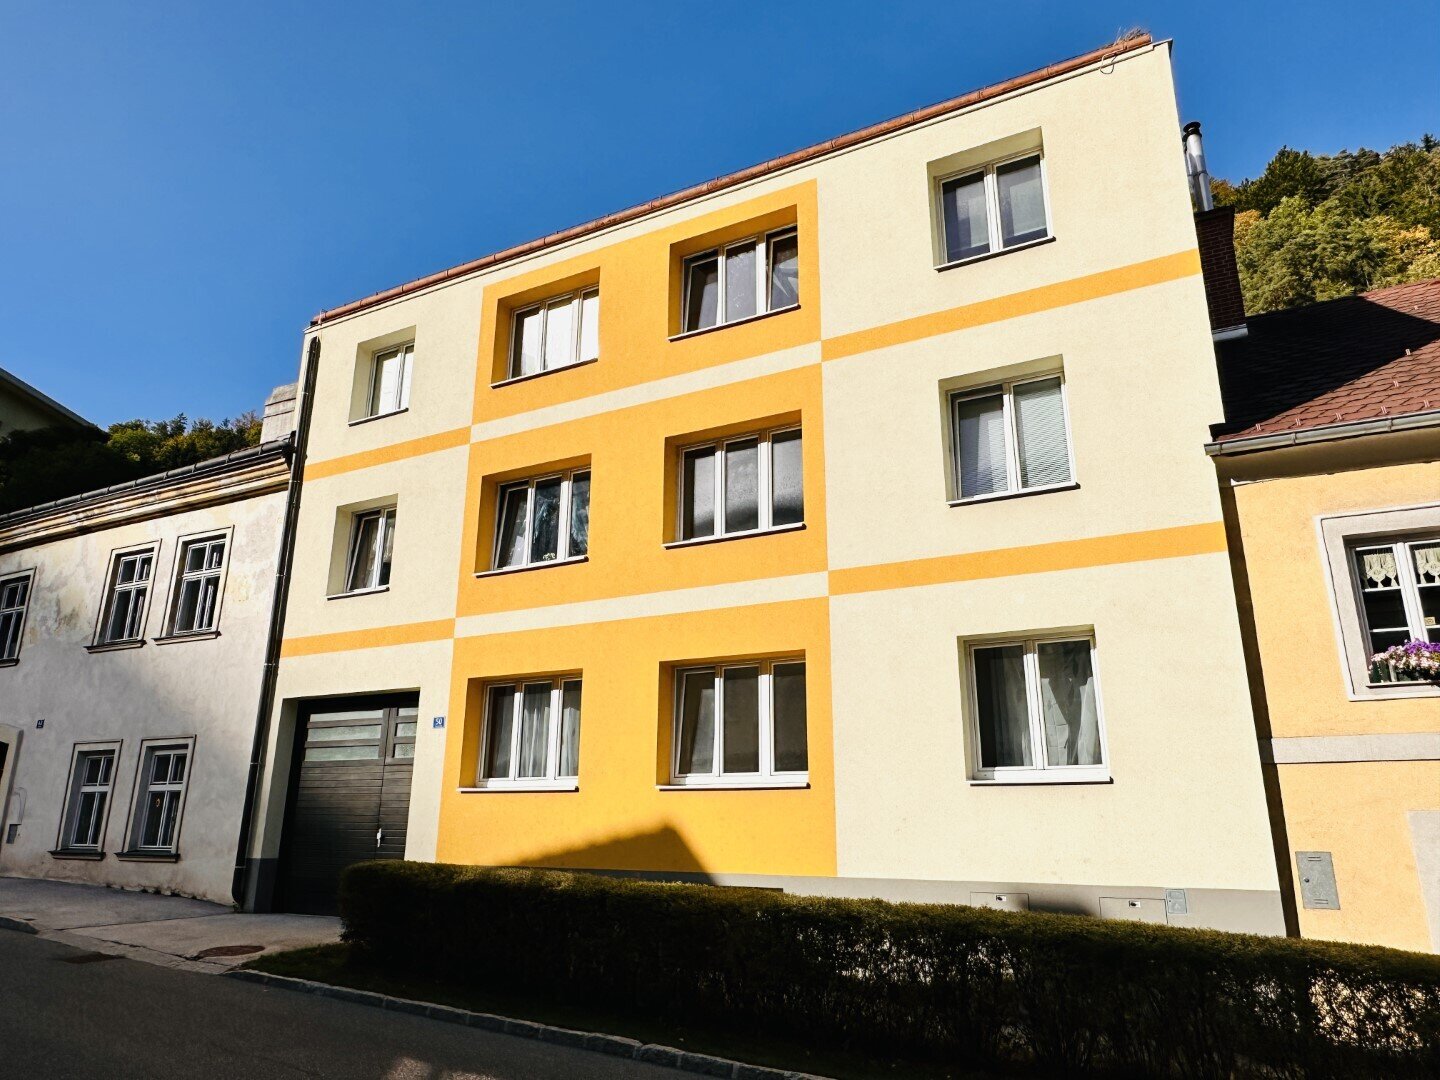 2-room apartment for sale in Schottwien near Semmering!, 2680 Semmering, Wohnung